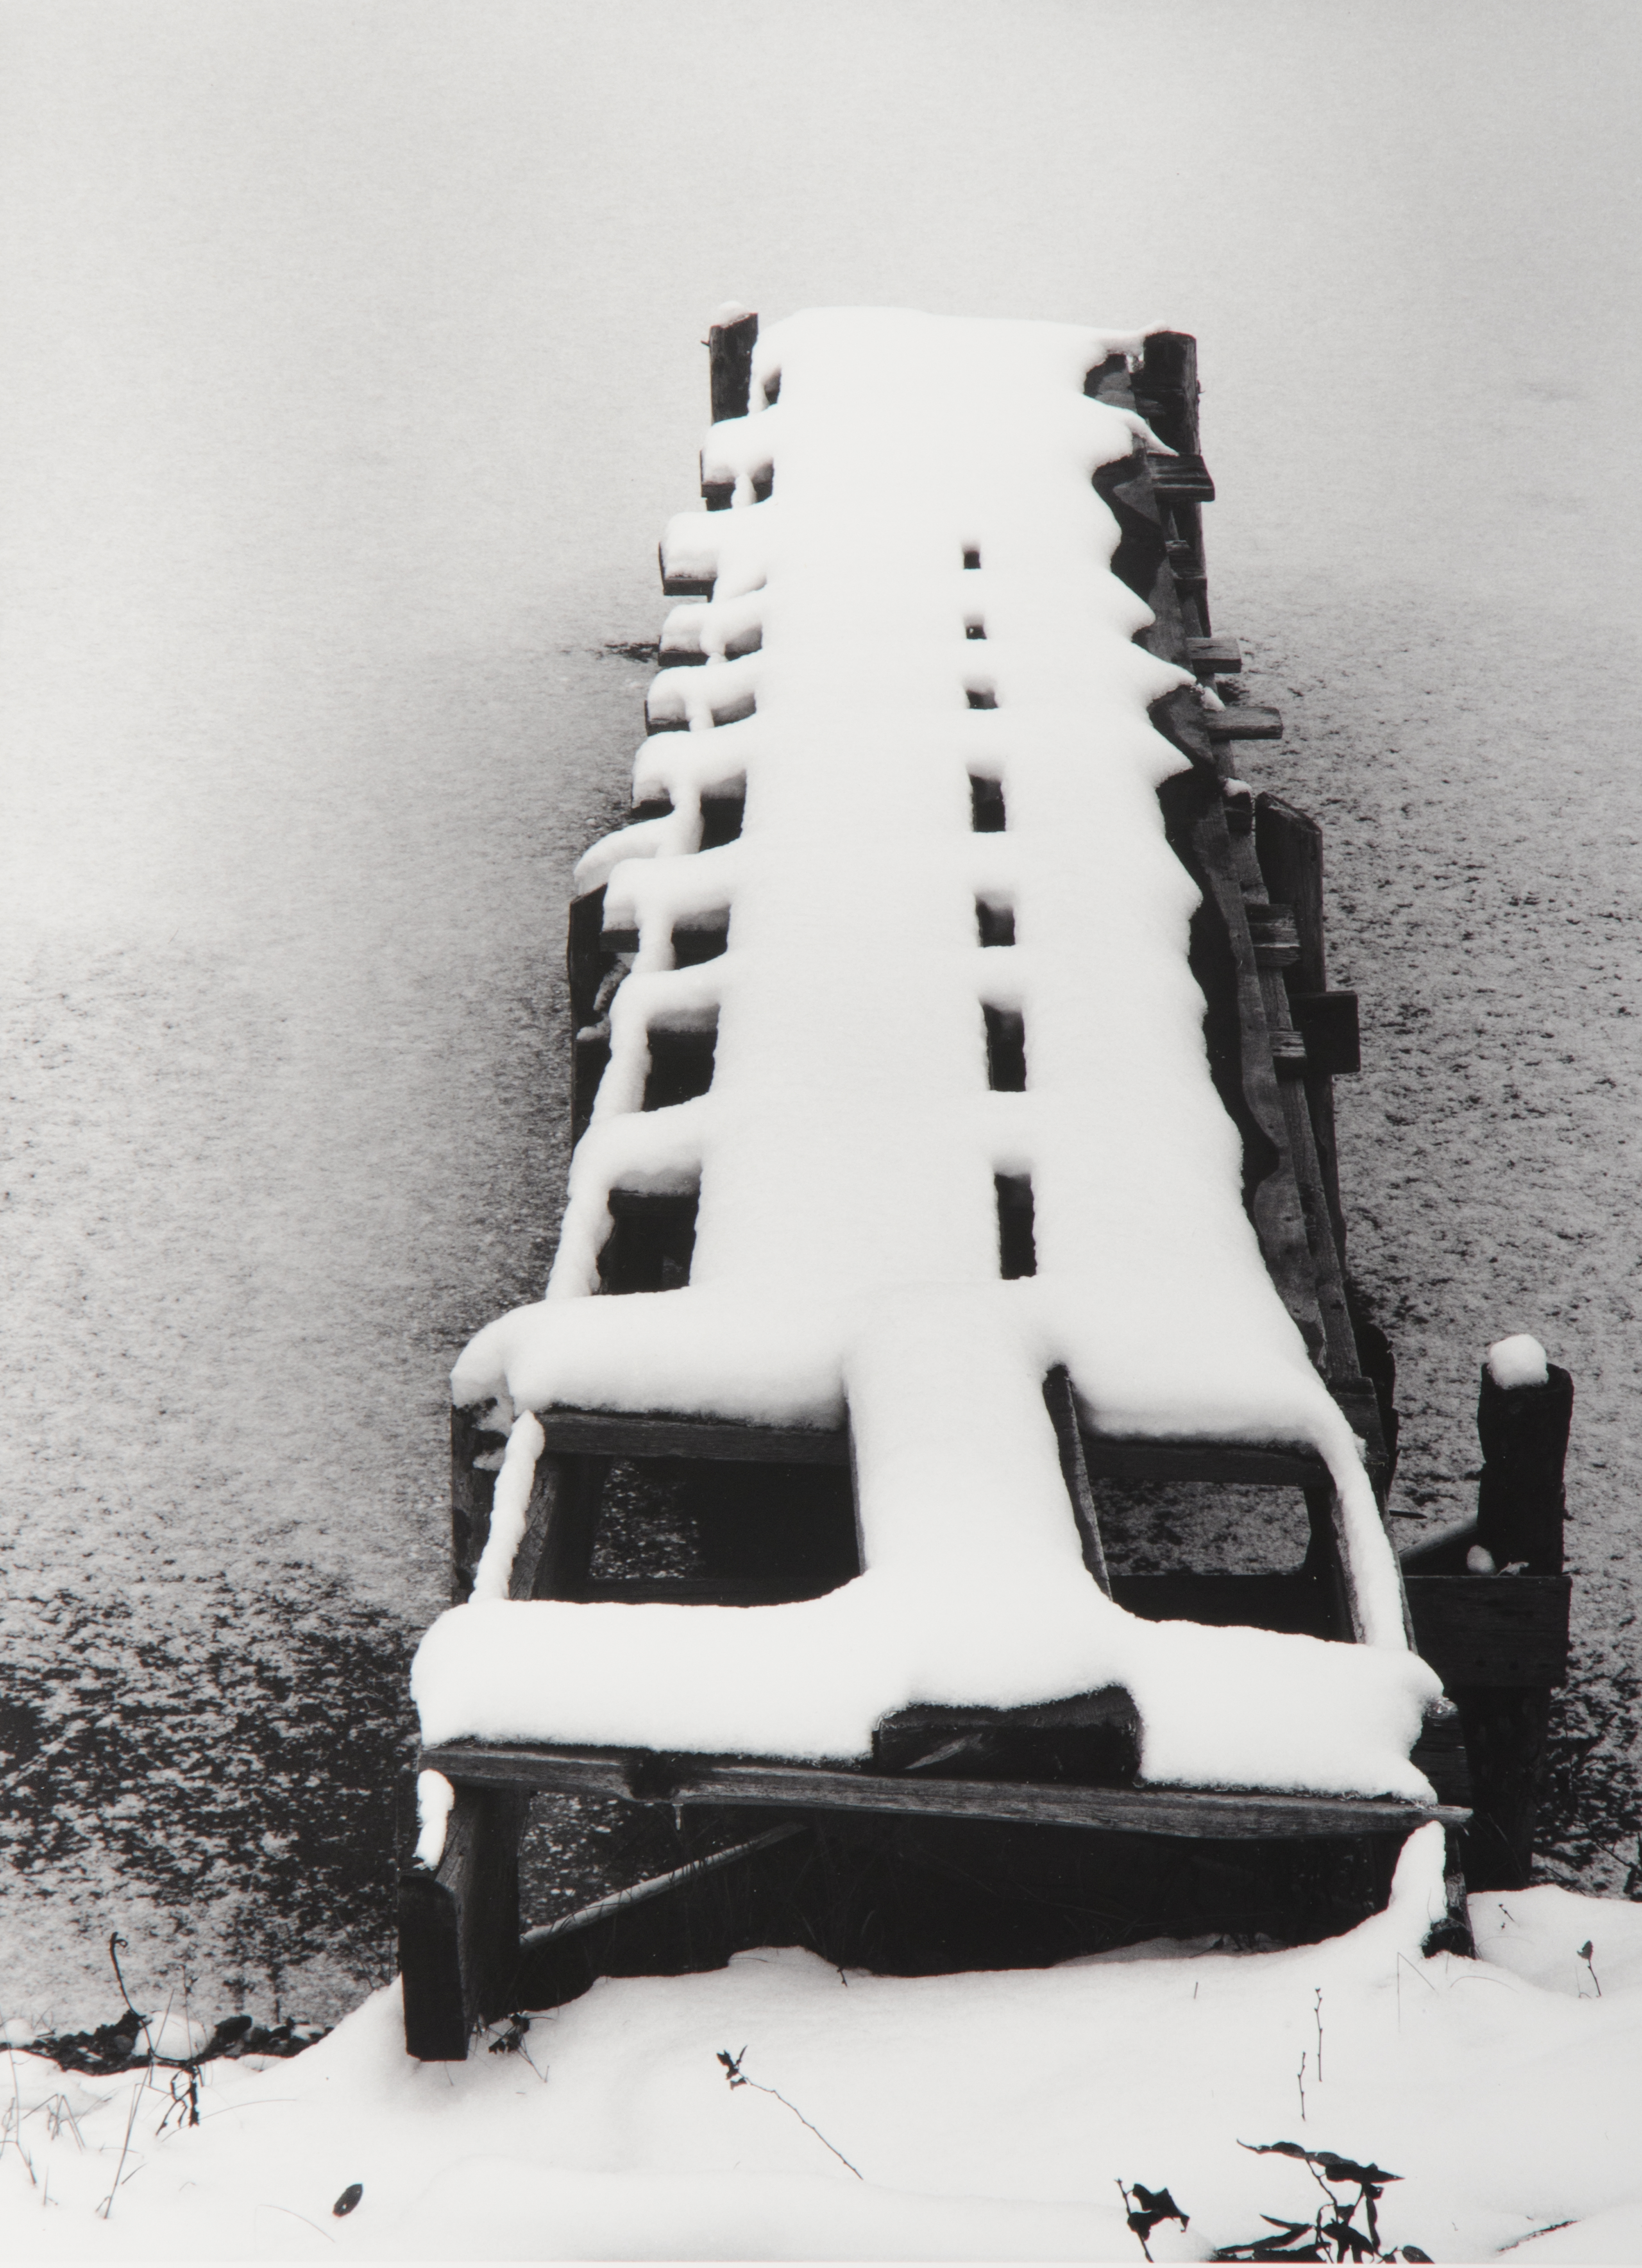 Dock in Snow, Vermont, 1971 from the Jupiter Portfolio